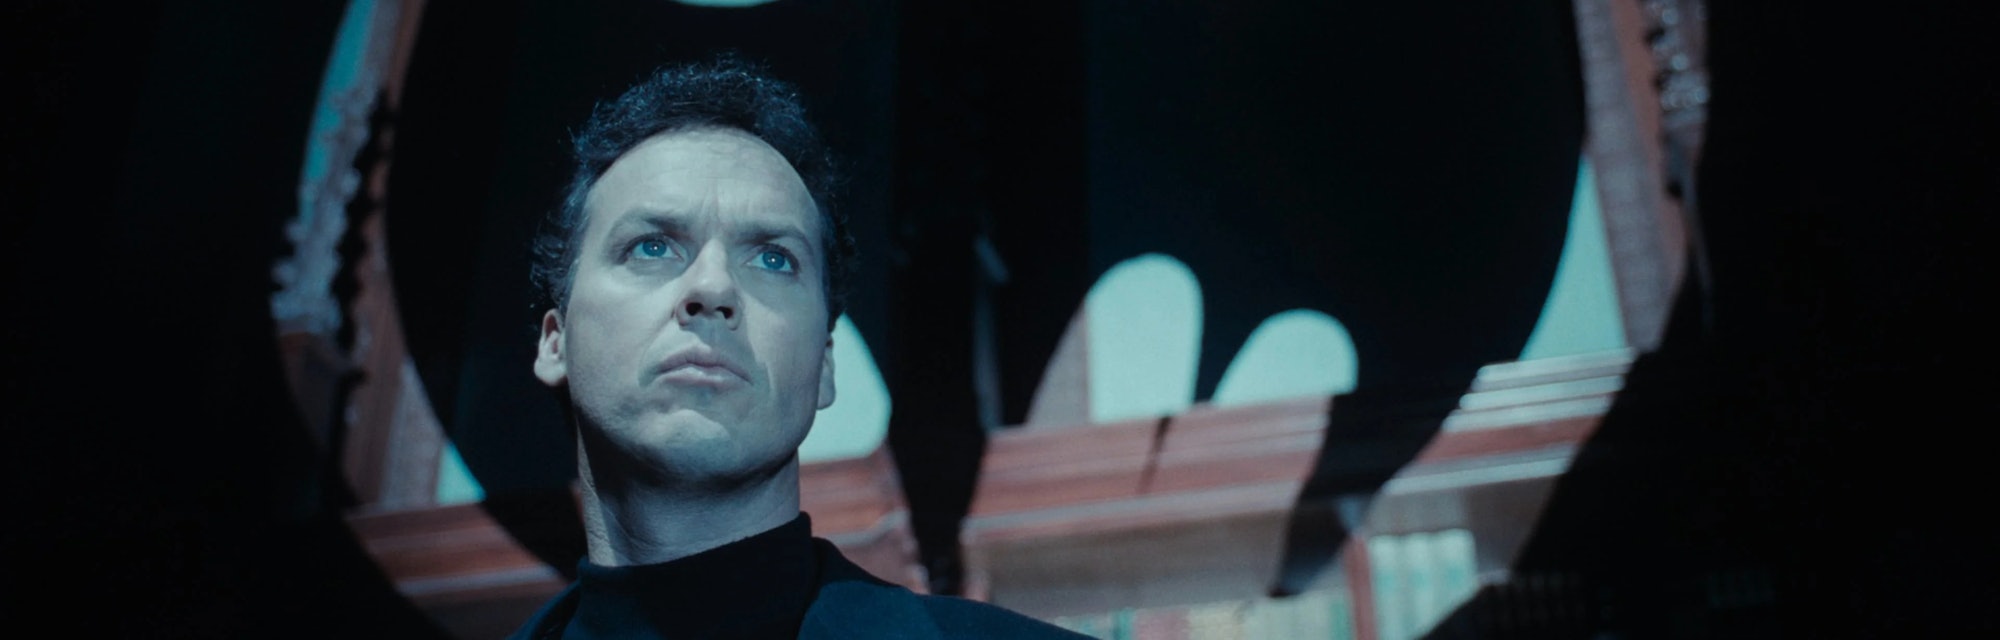 Bruce Wayne (Michael Keaton) stands beneath a Bat emblem in Tim Burton's Batman Returns